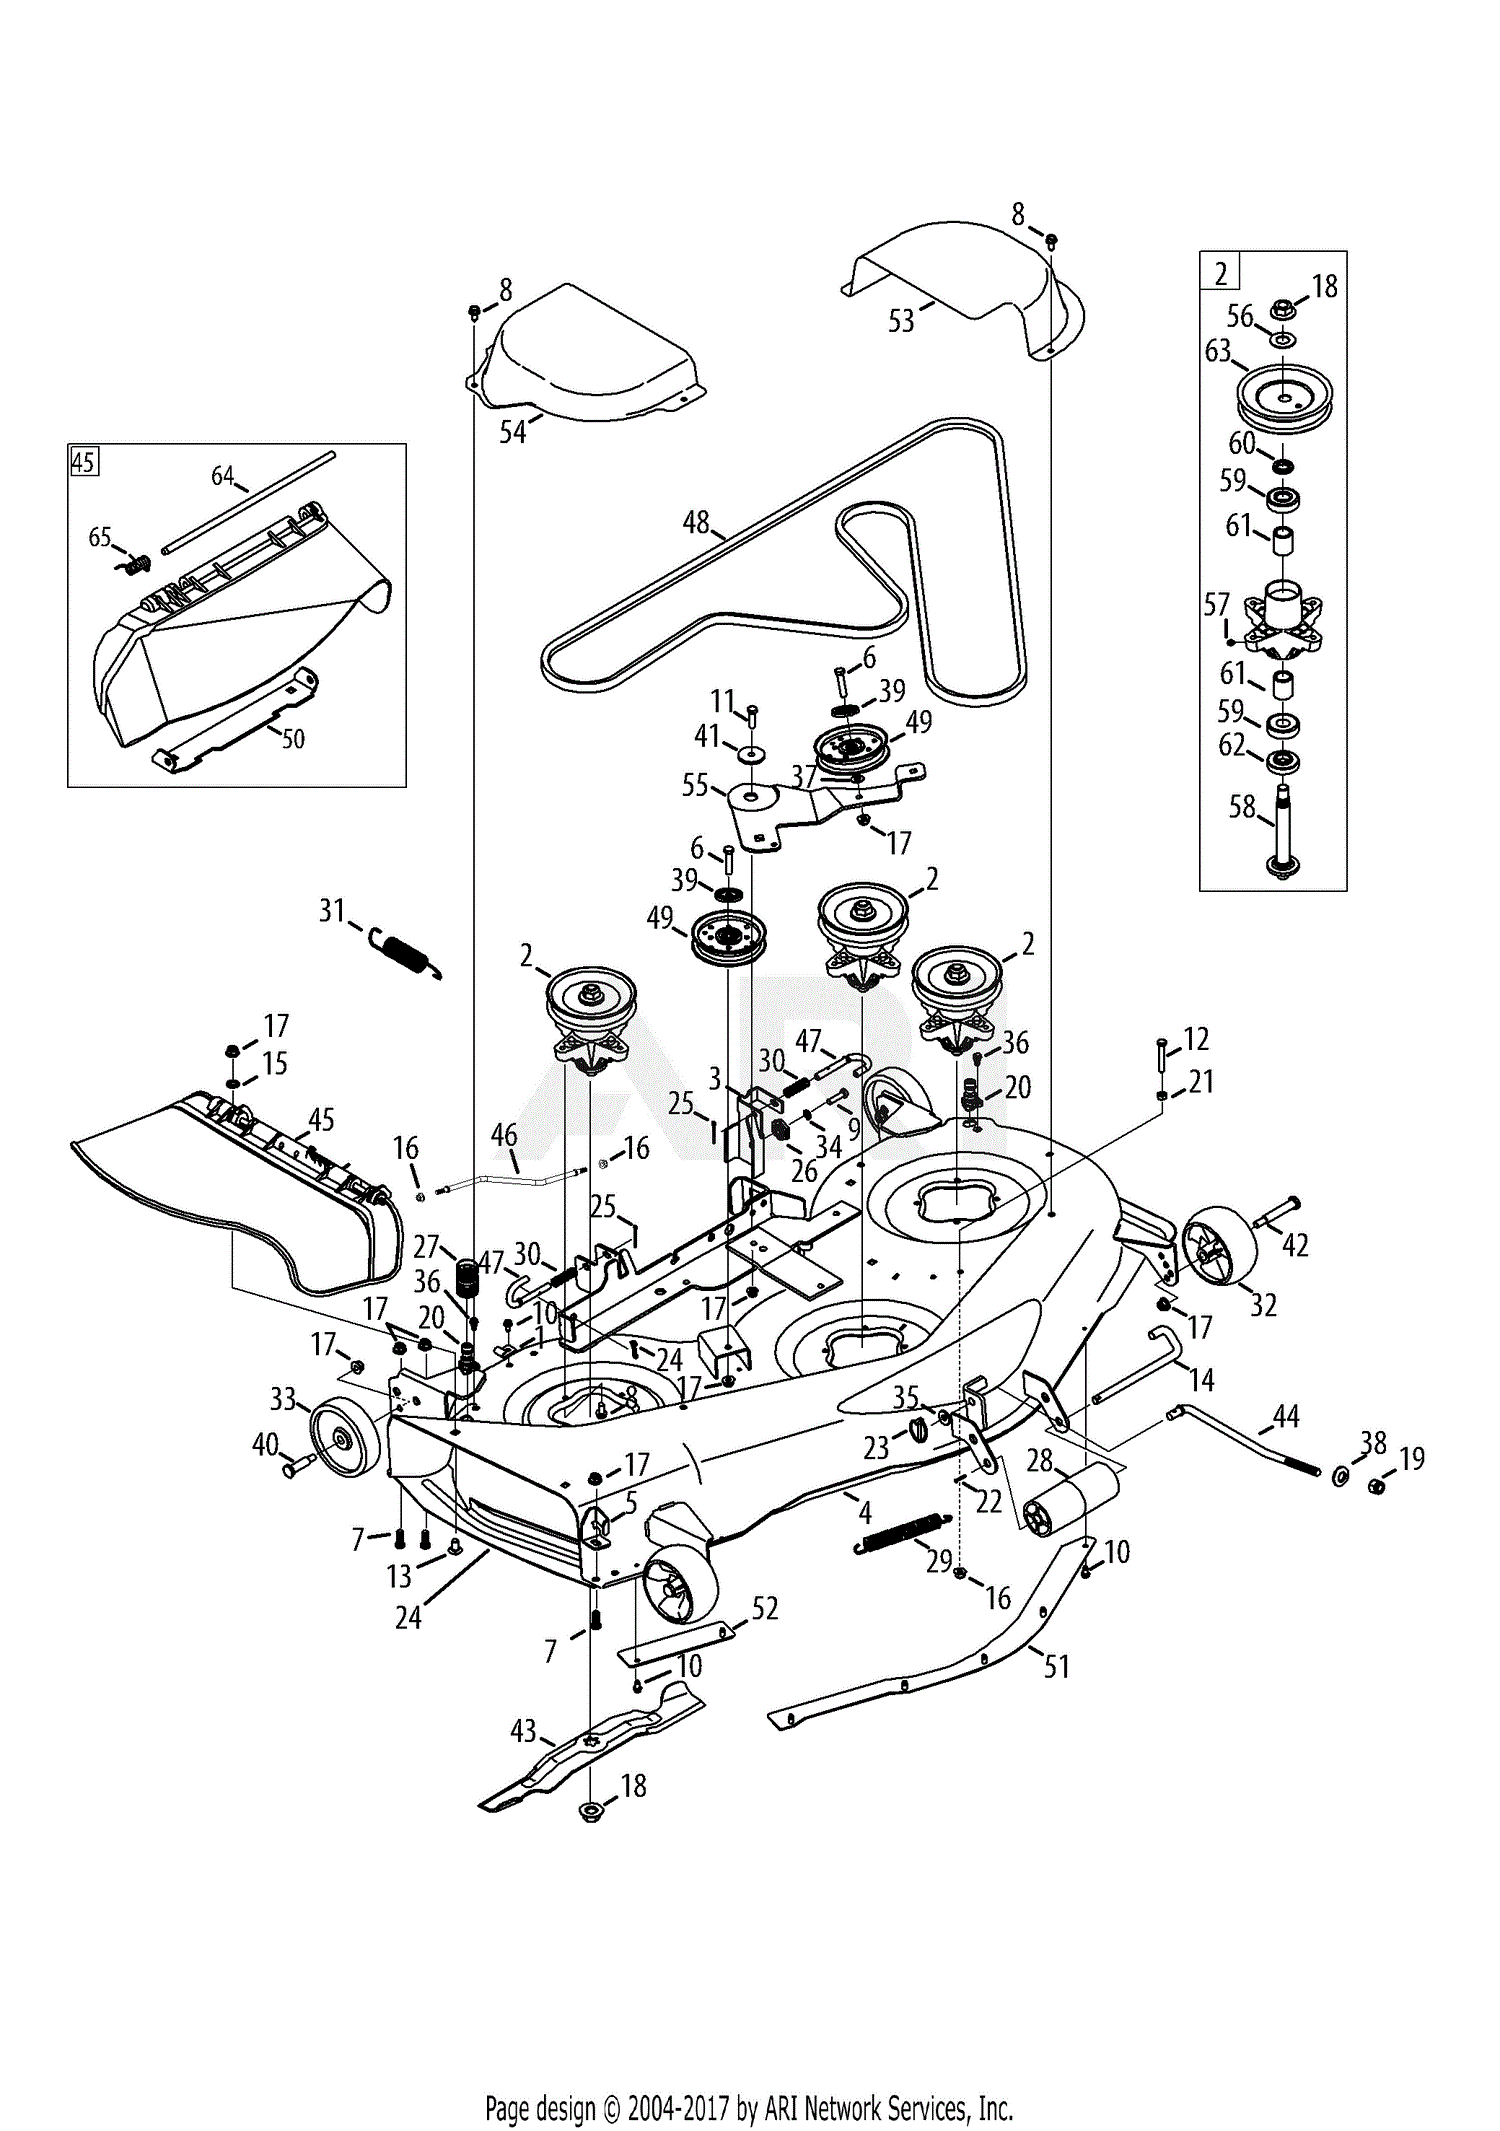 troy bilt riding mower parts manual